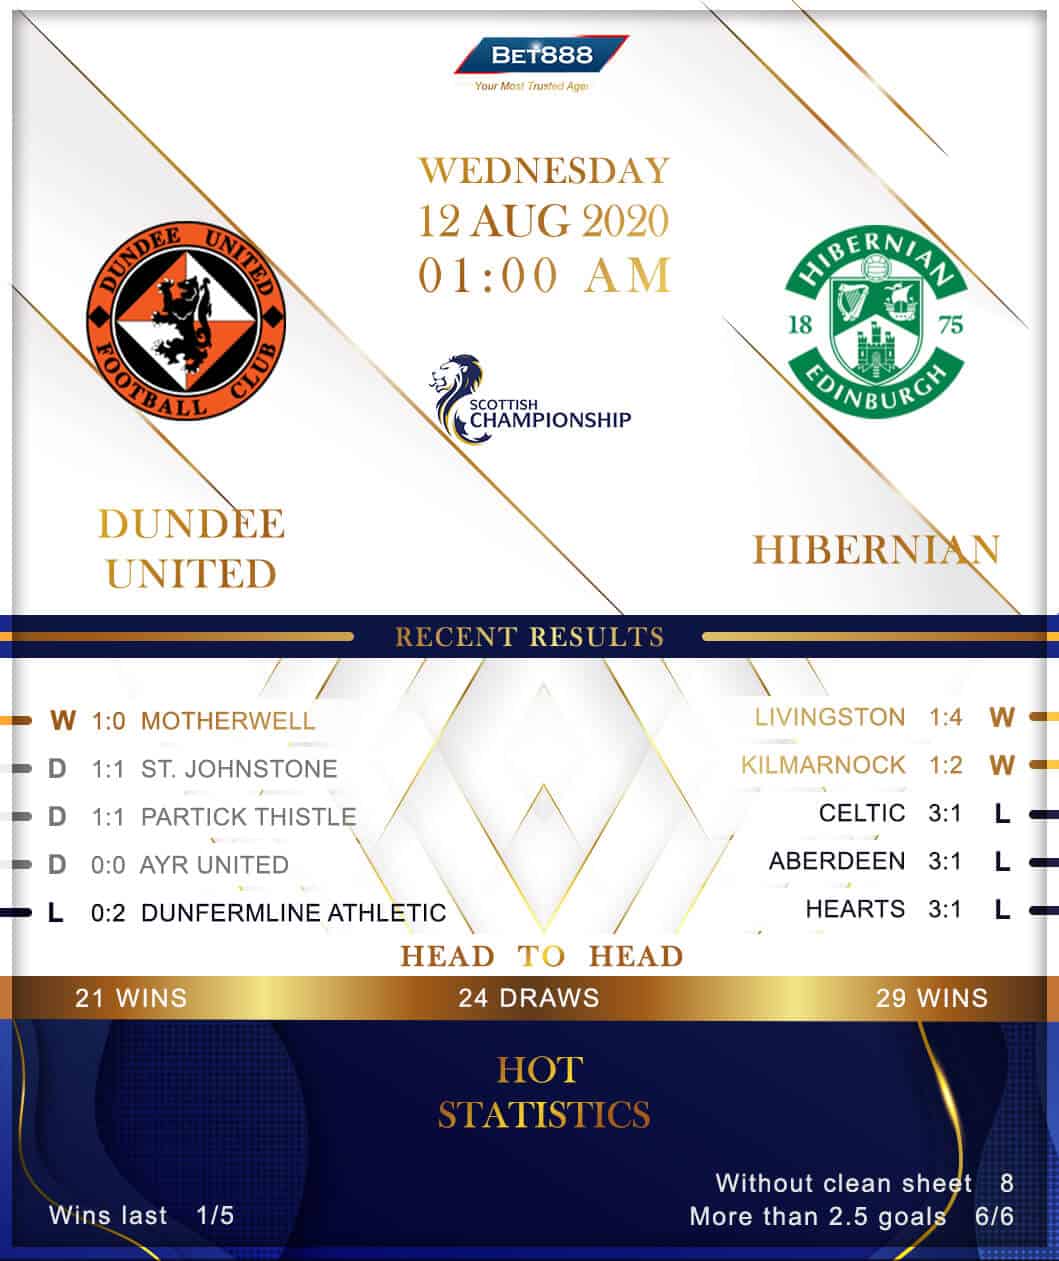 Dundee United vs Hibernian 12/08/20